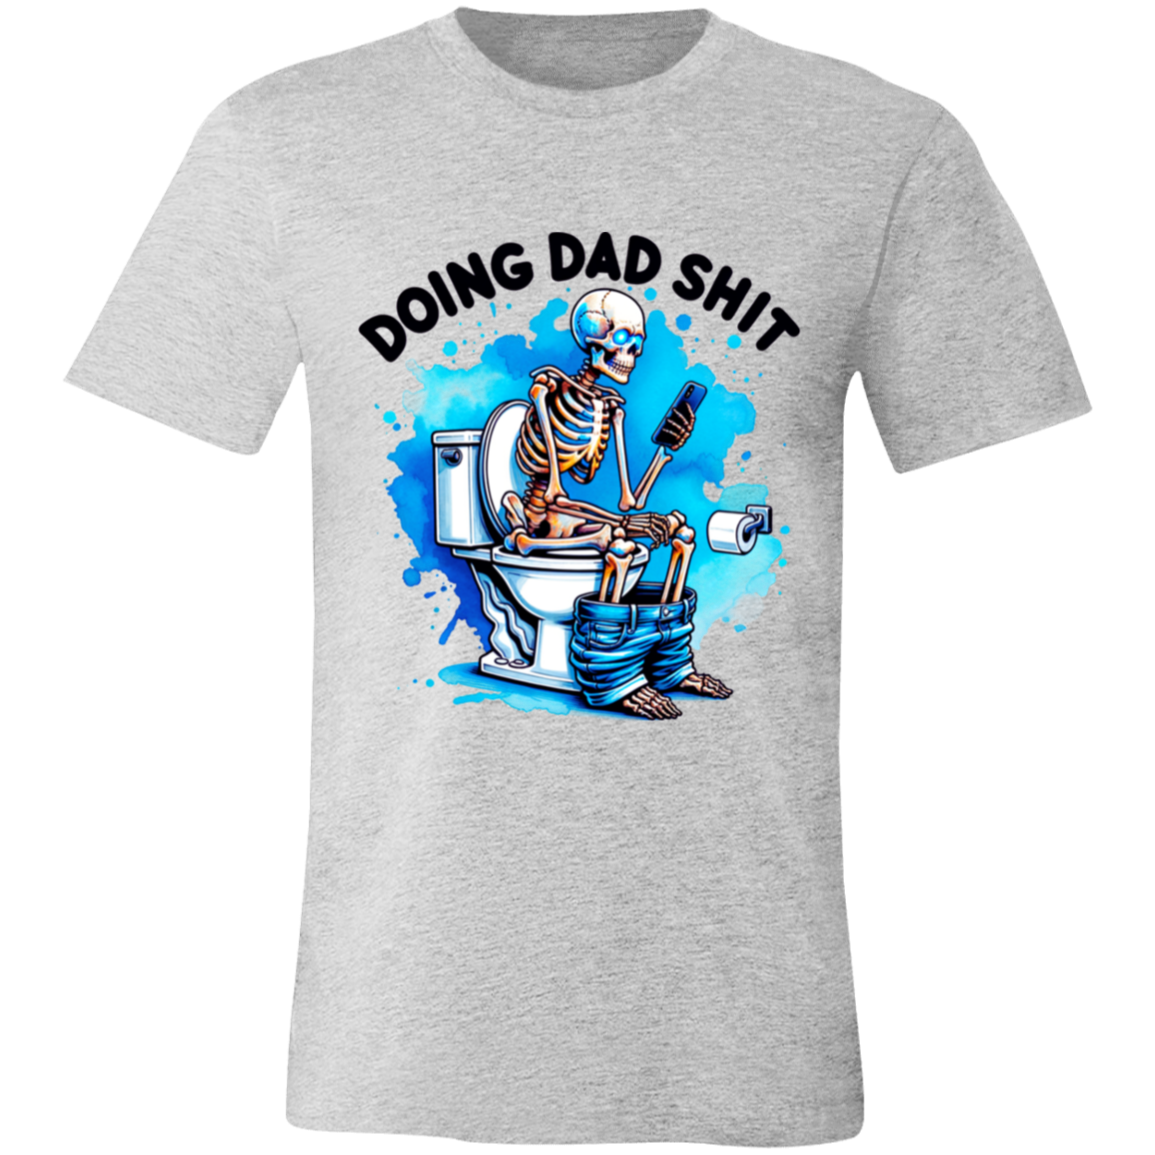 Dad Short-Sleeve Shirts